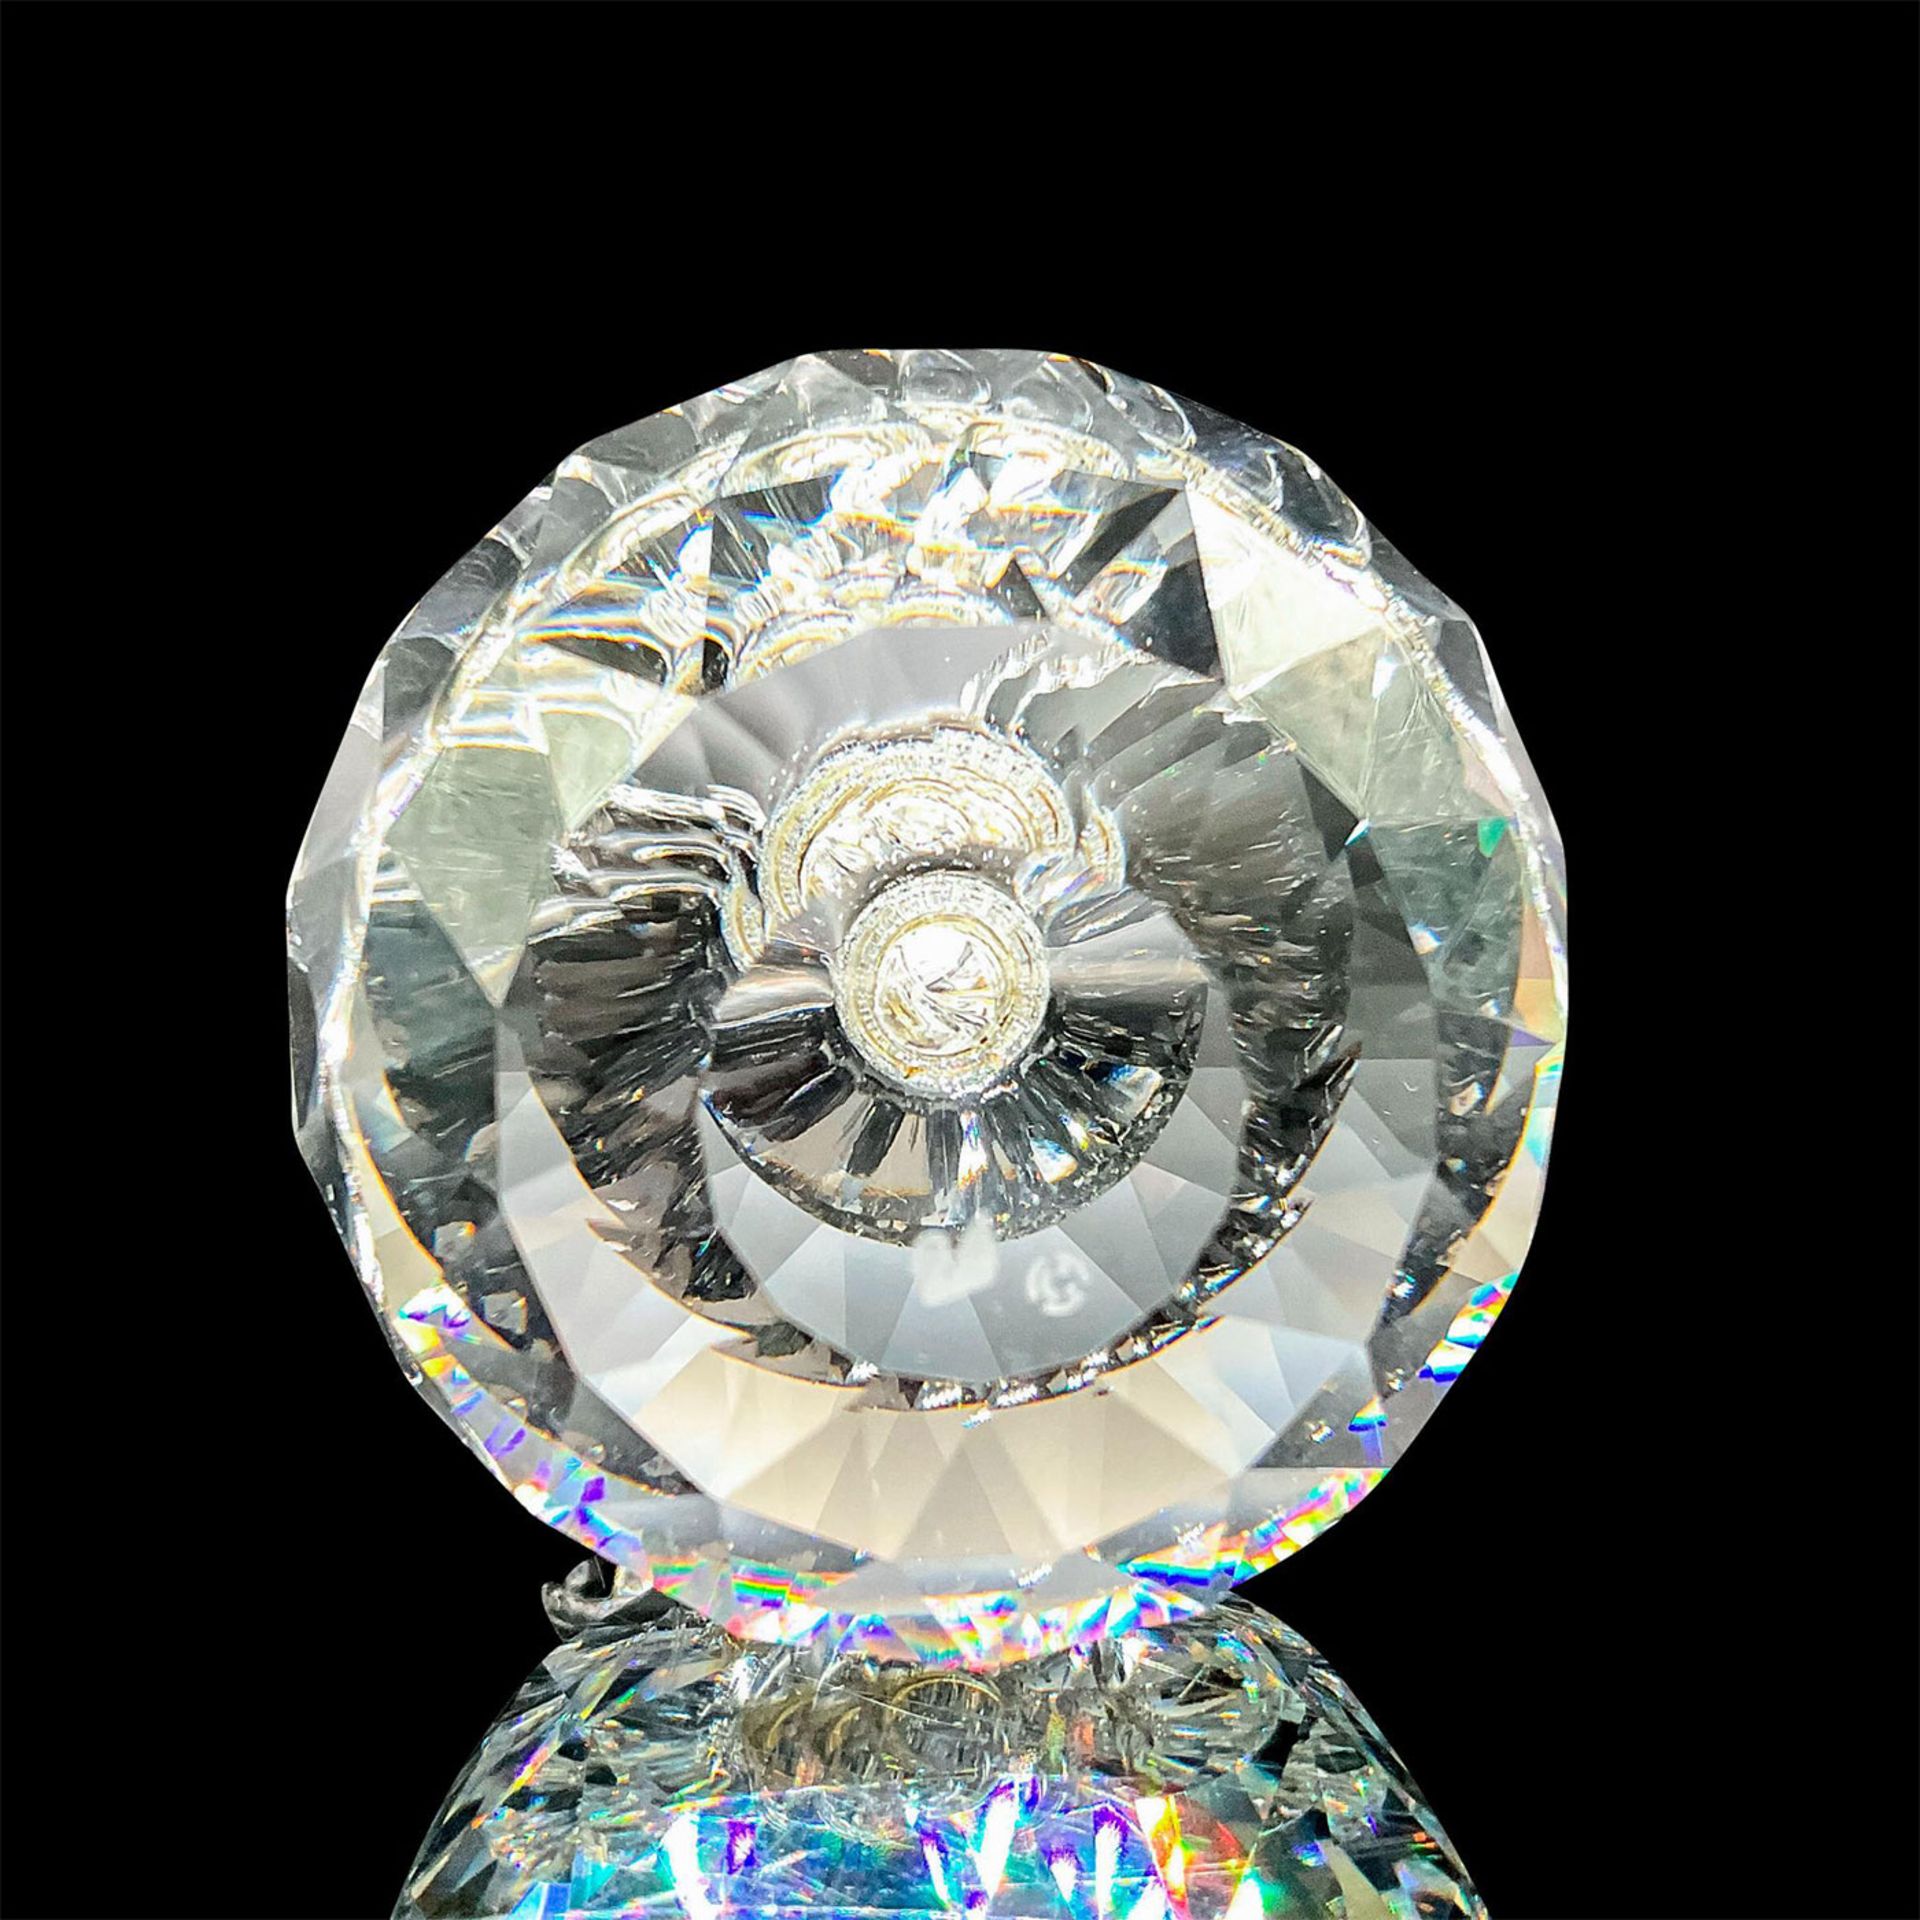 Swarovski Silver Crystal Figurine, Apple 160796 - Image 4 of 4